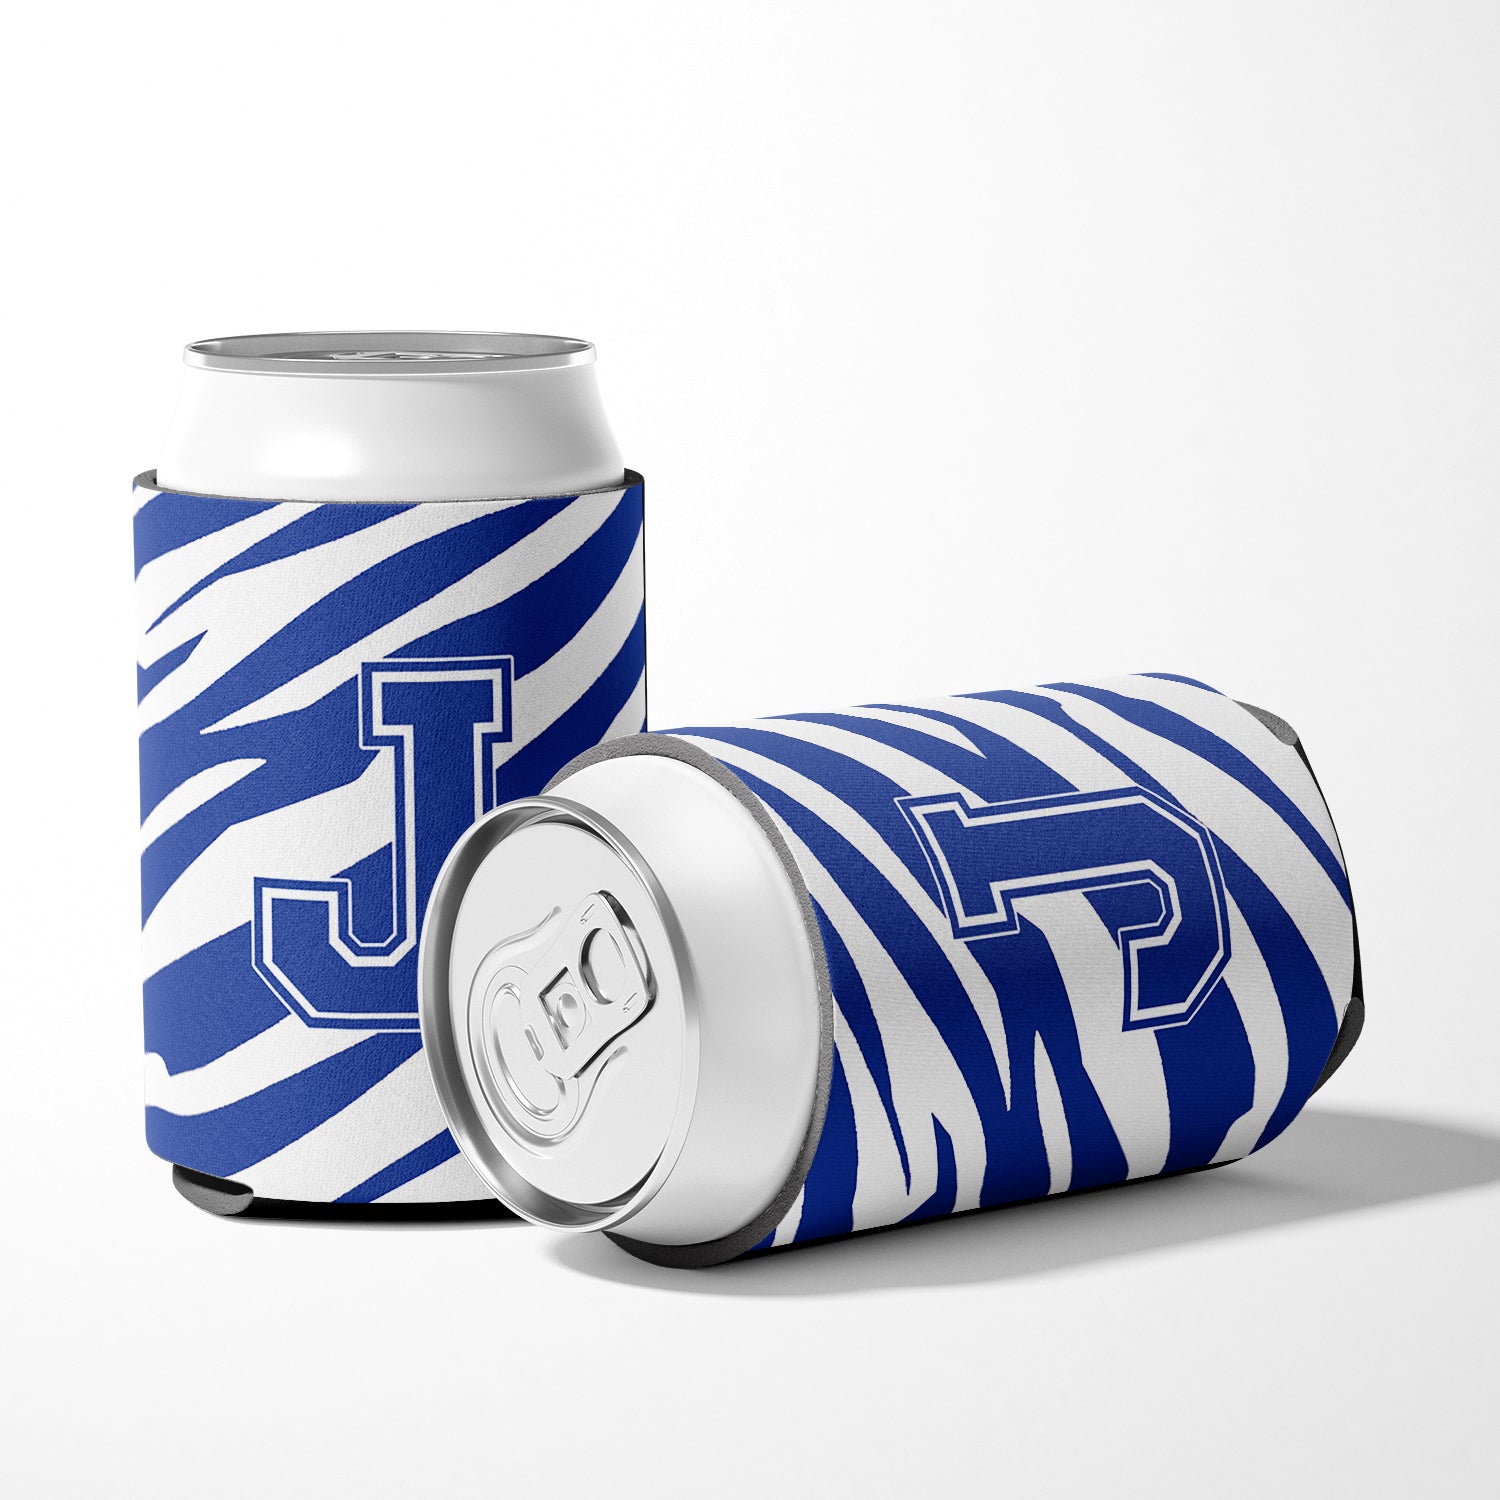 Letter J Initial Monogram - Tiger Stripe Blue and White Can Beverage Insulator Hugger